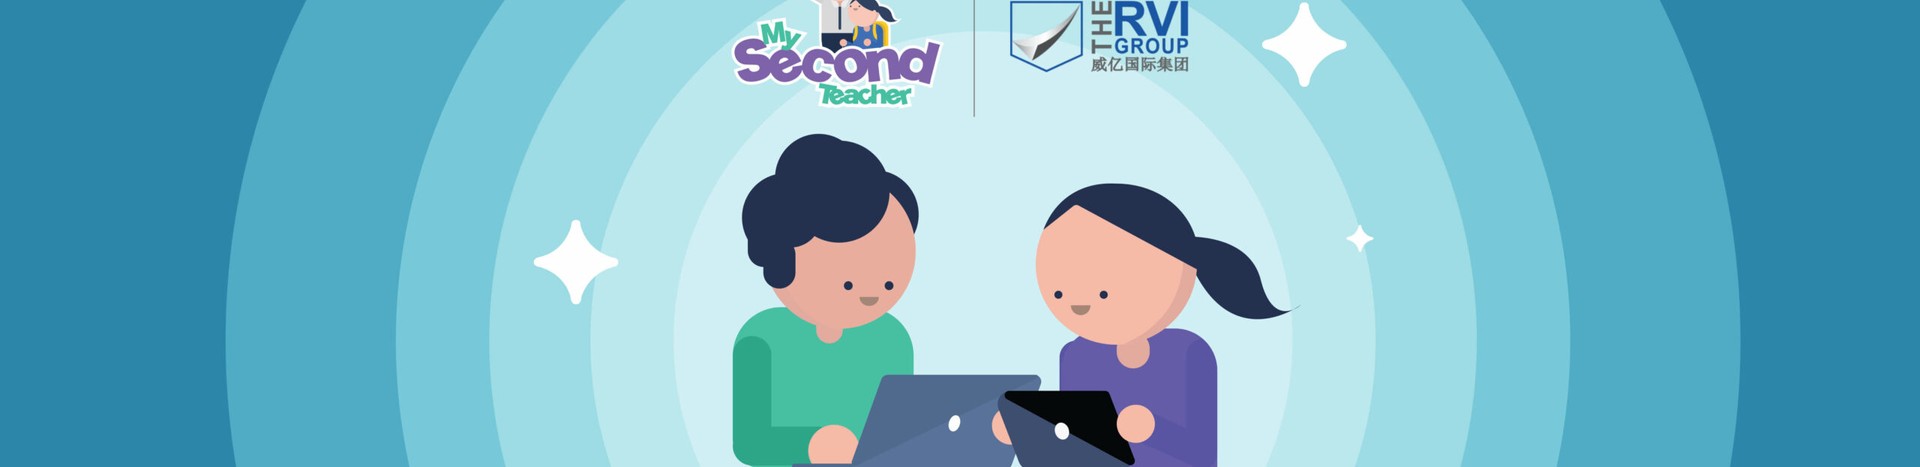 Advanced Pedagogy Announces Partnership with The RVI GROUP